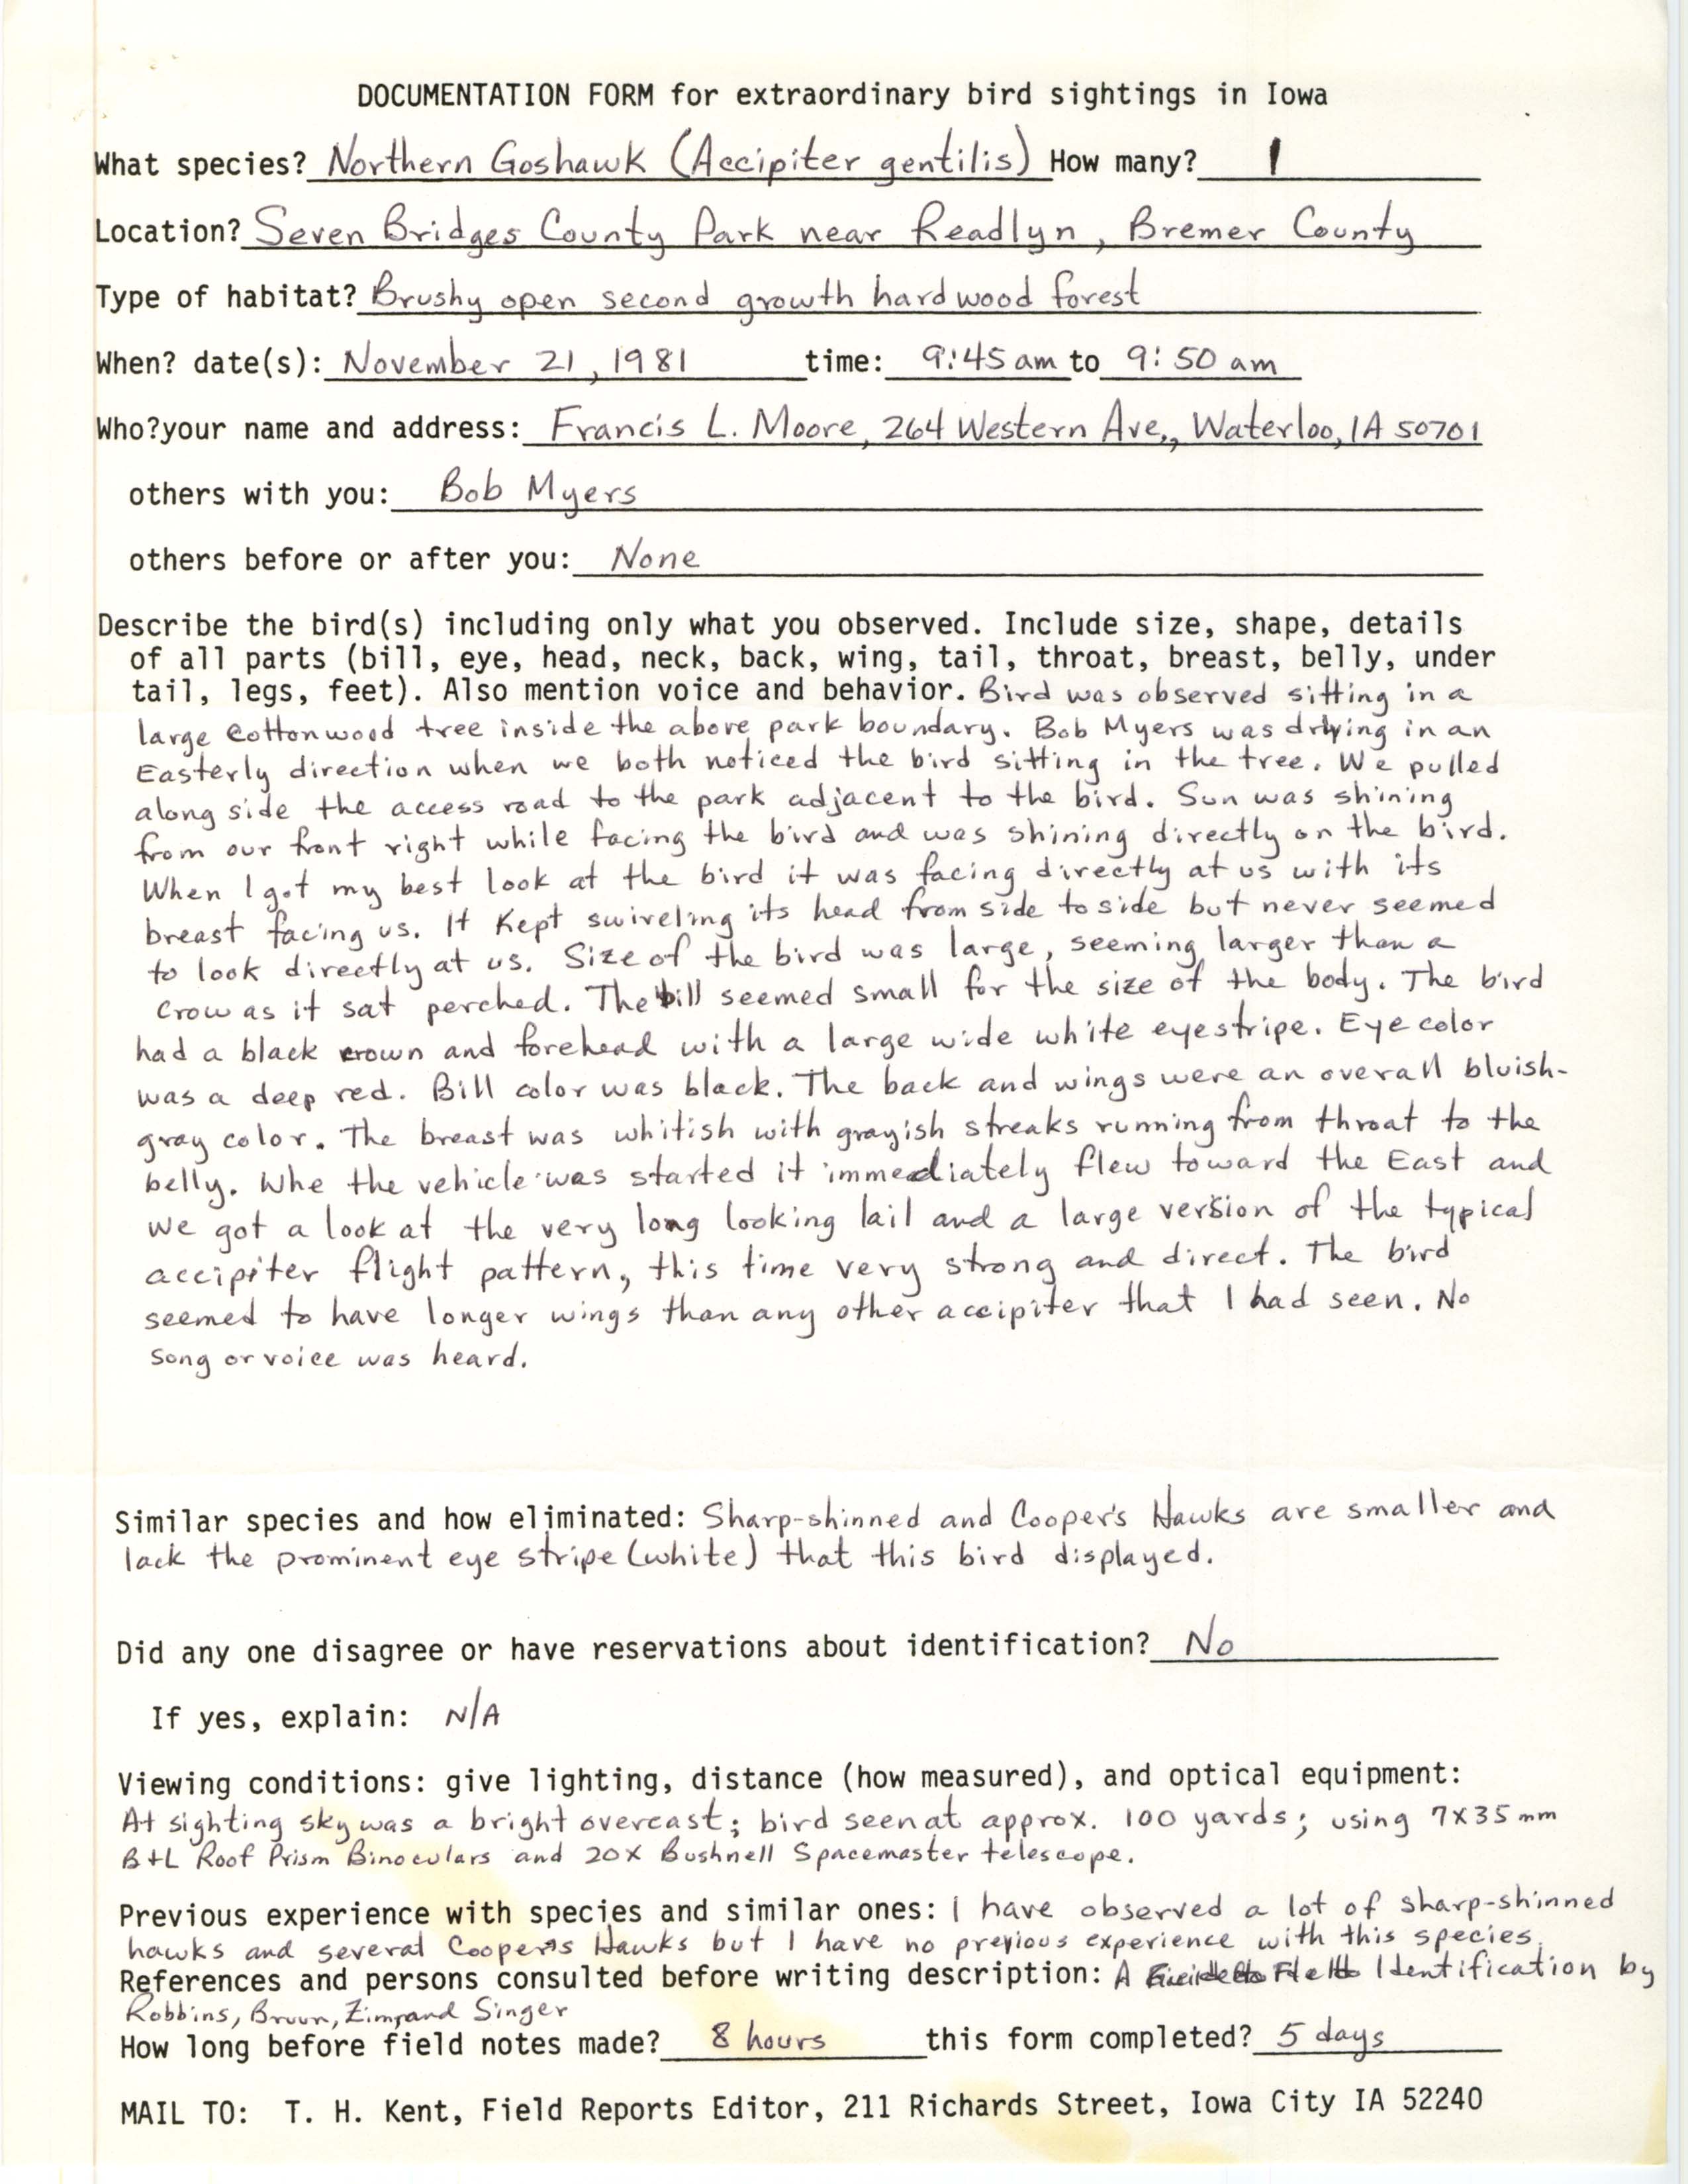 Rare bird documentation form for Northern Goshawk at Seven Bridges County Park in 1981